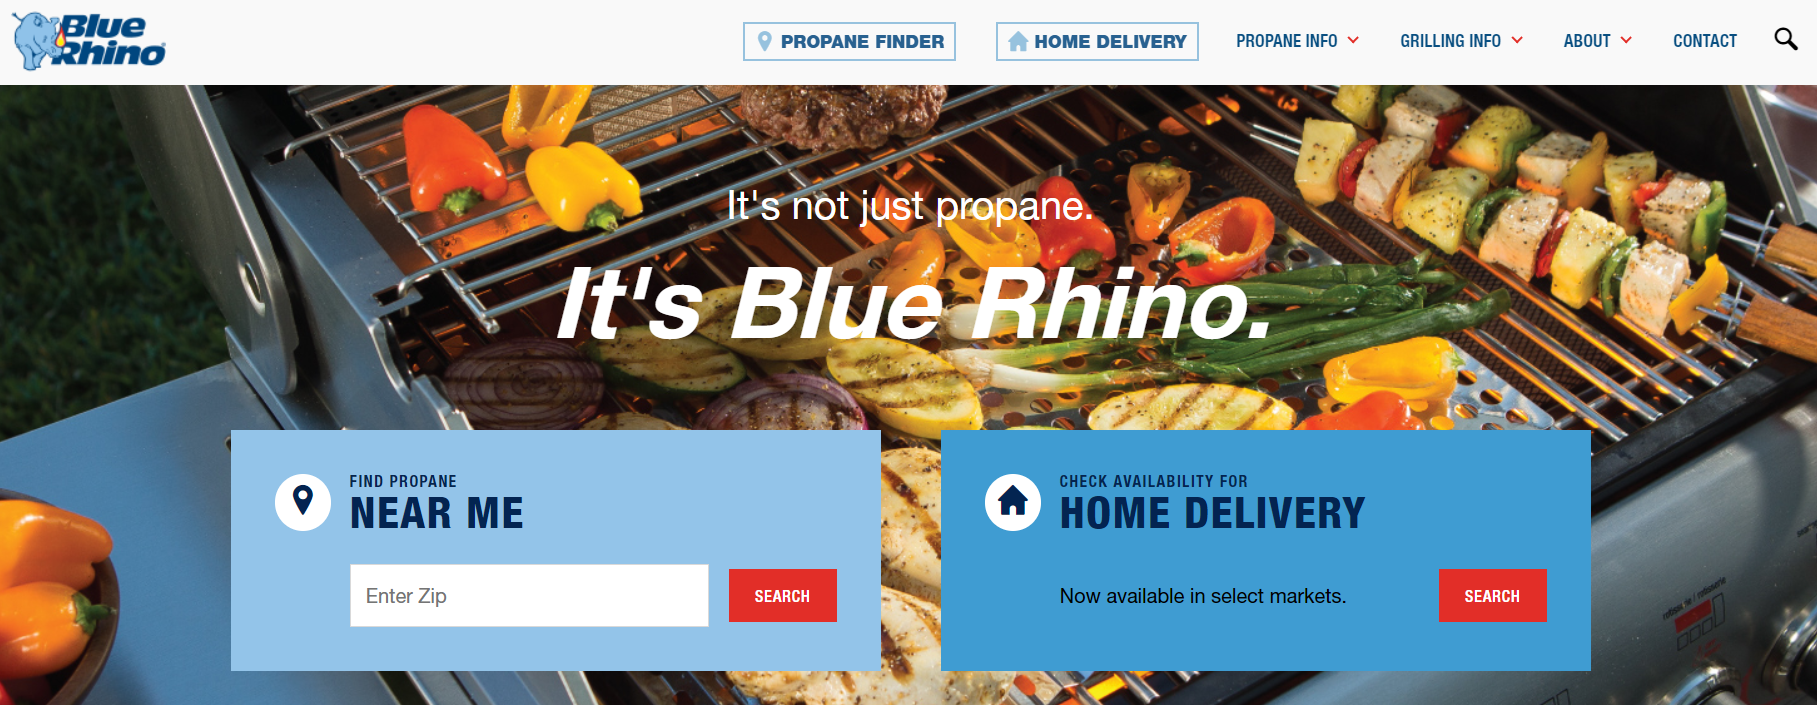 How To Claim Blue Rhino Rebate